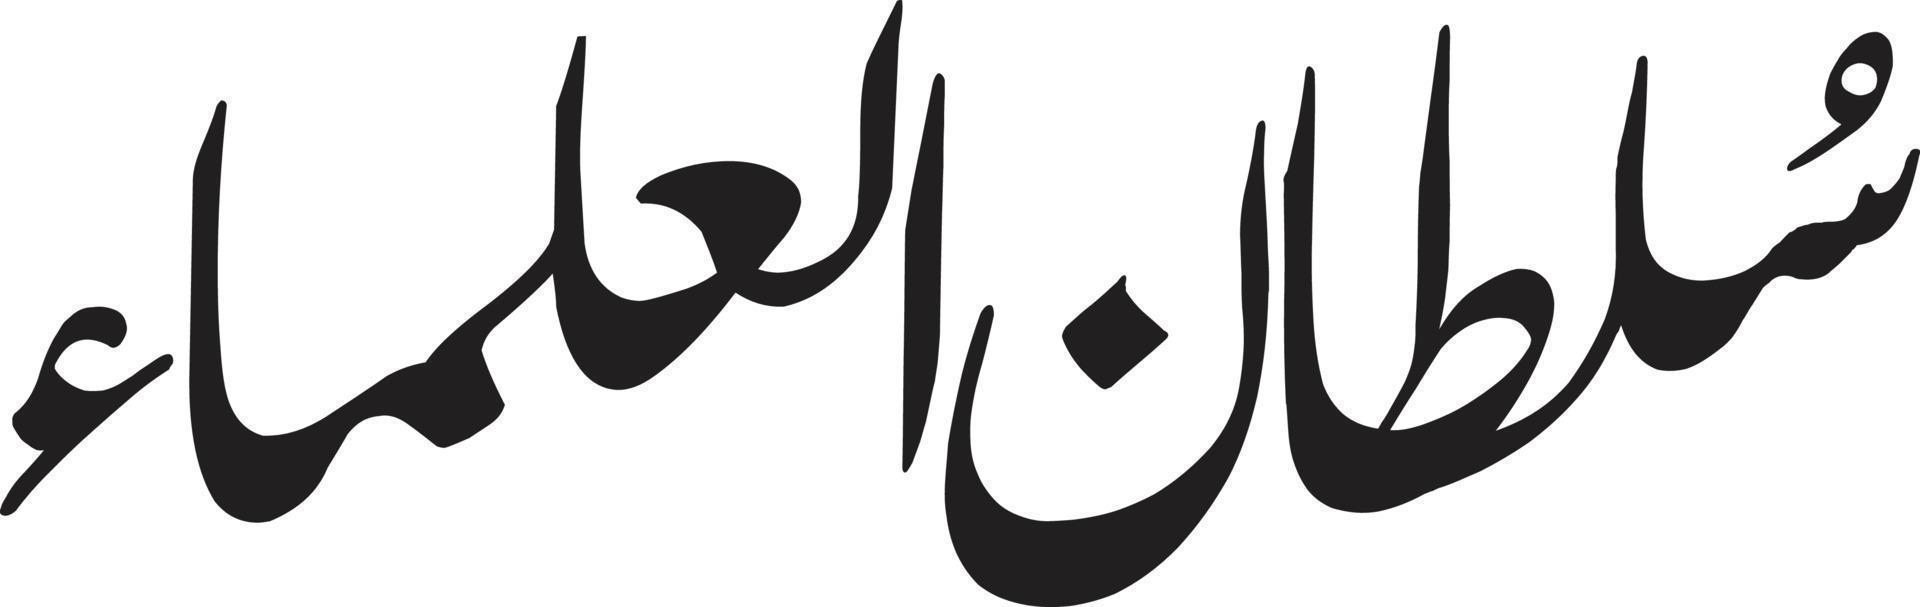 vecteur gratuit de calligraphie islamique sultan al ulma